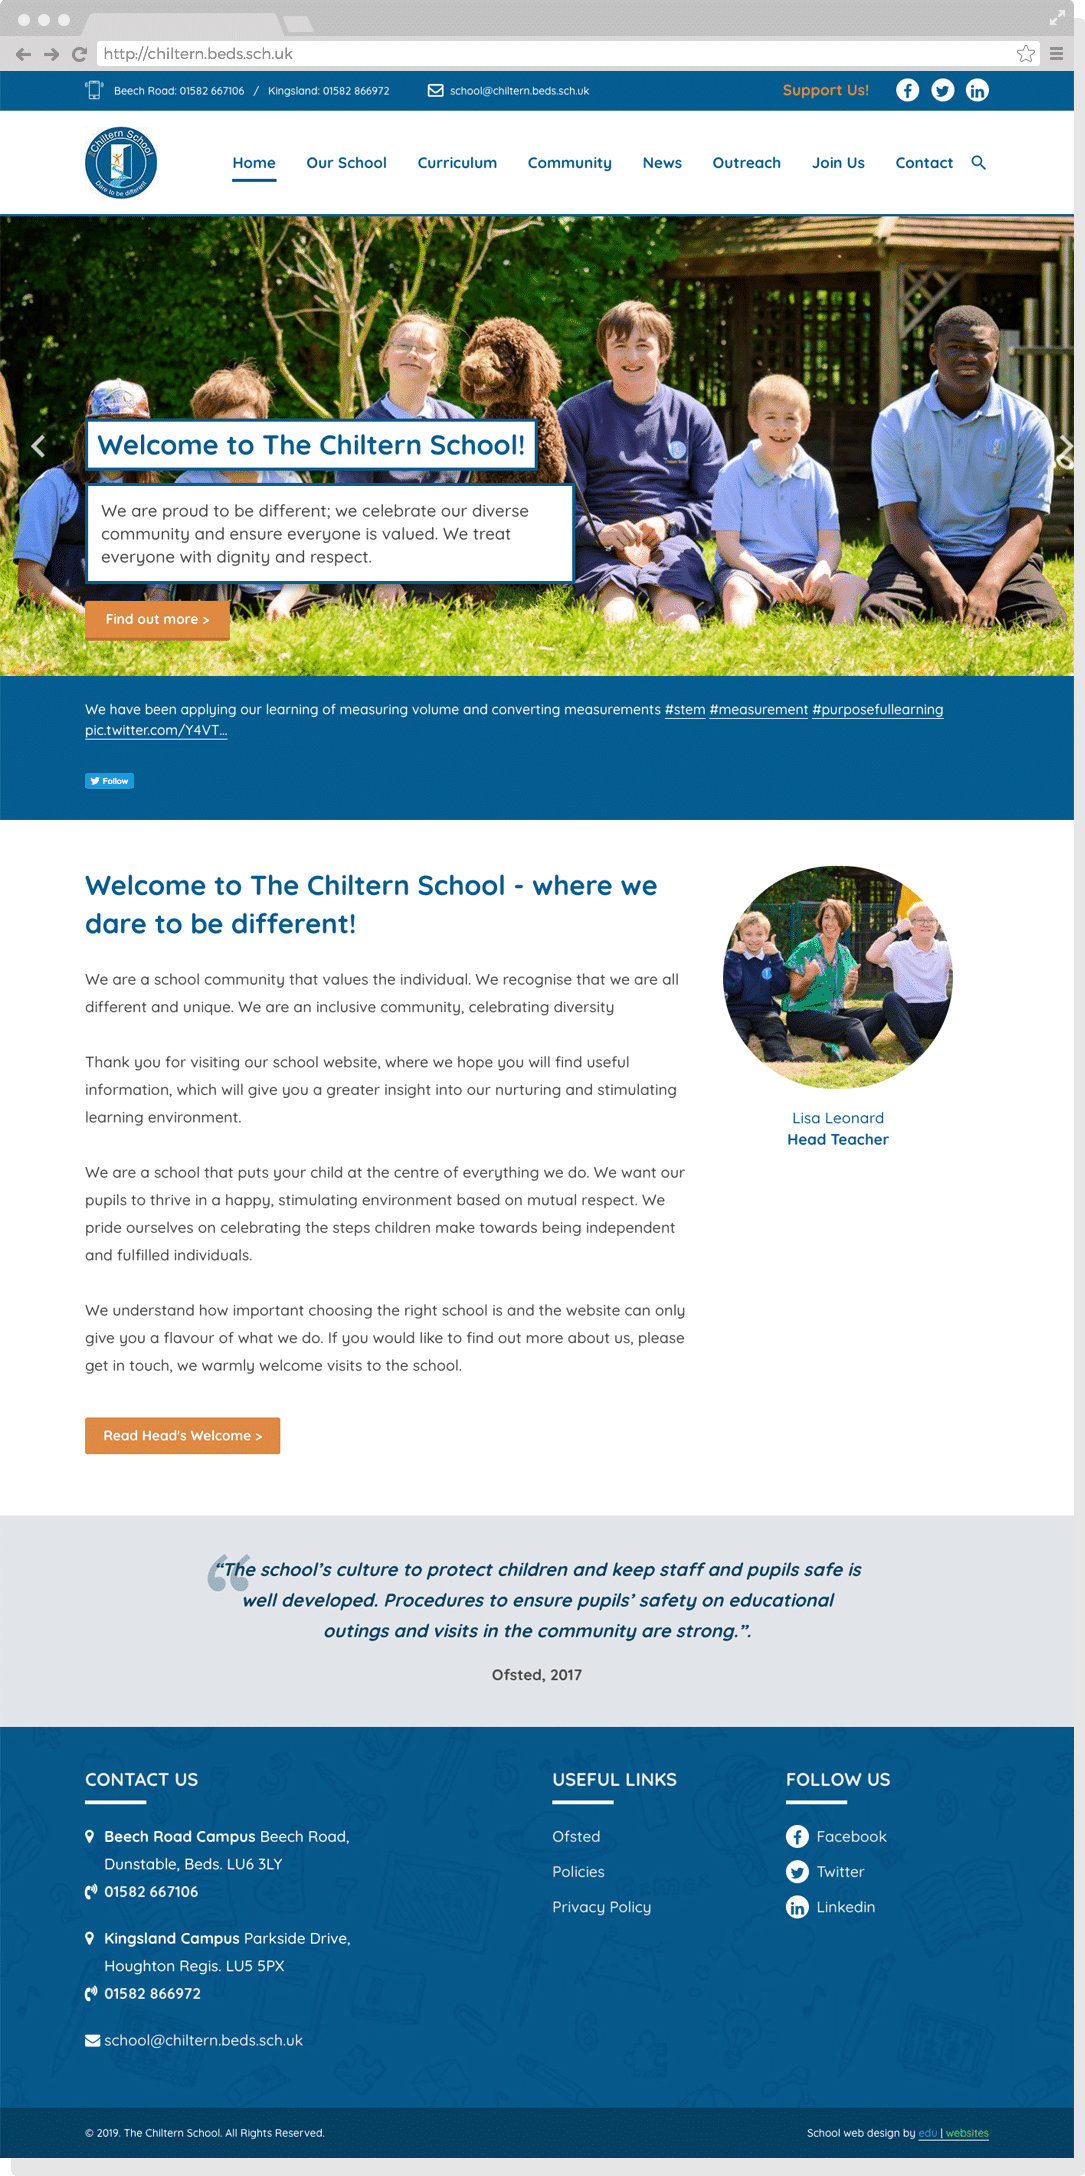 The Chiltern School website